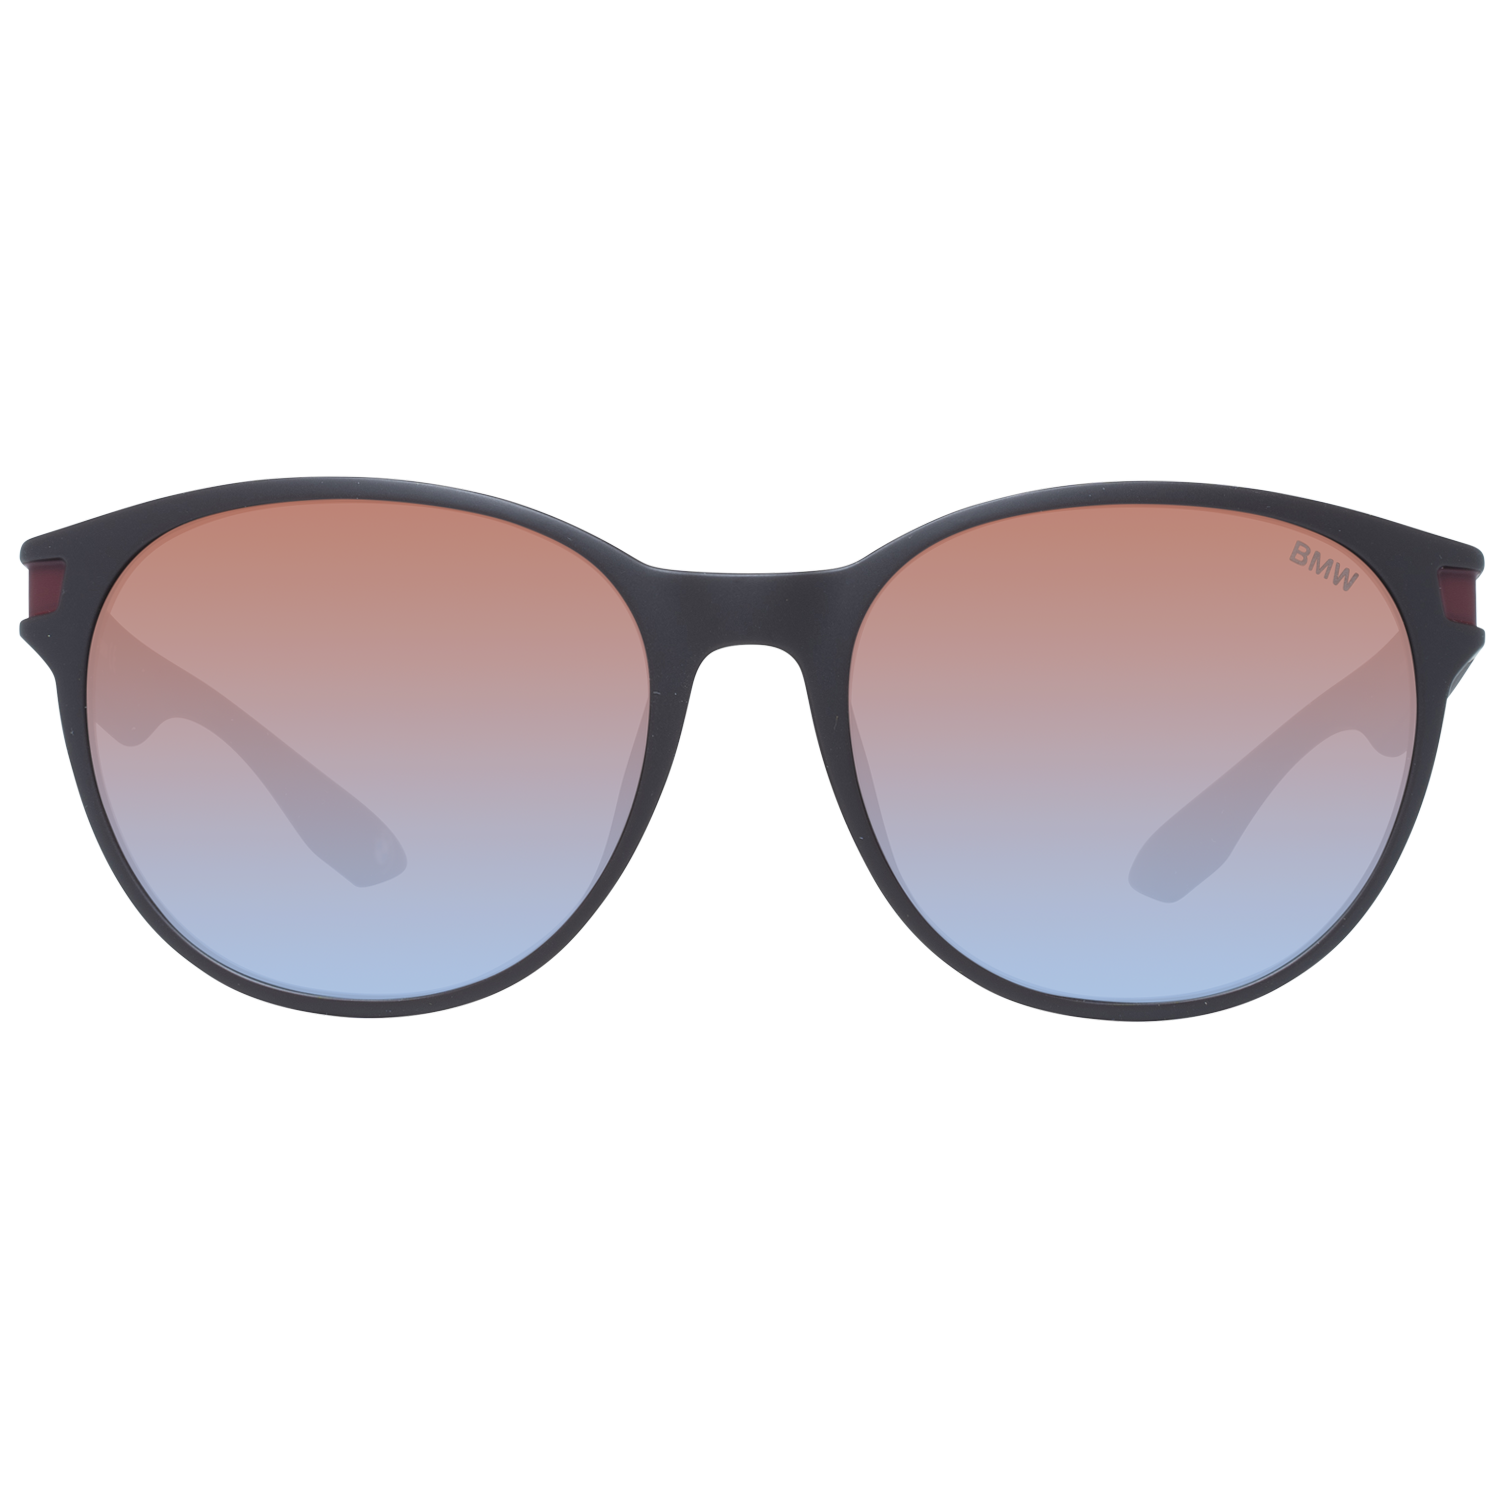 BMW Sunglasses BMW Sunglasses Men BW0004 49F 57mm Eyeglasses Eyewear UK USA Australia 